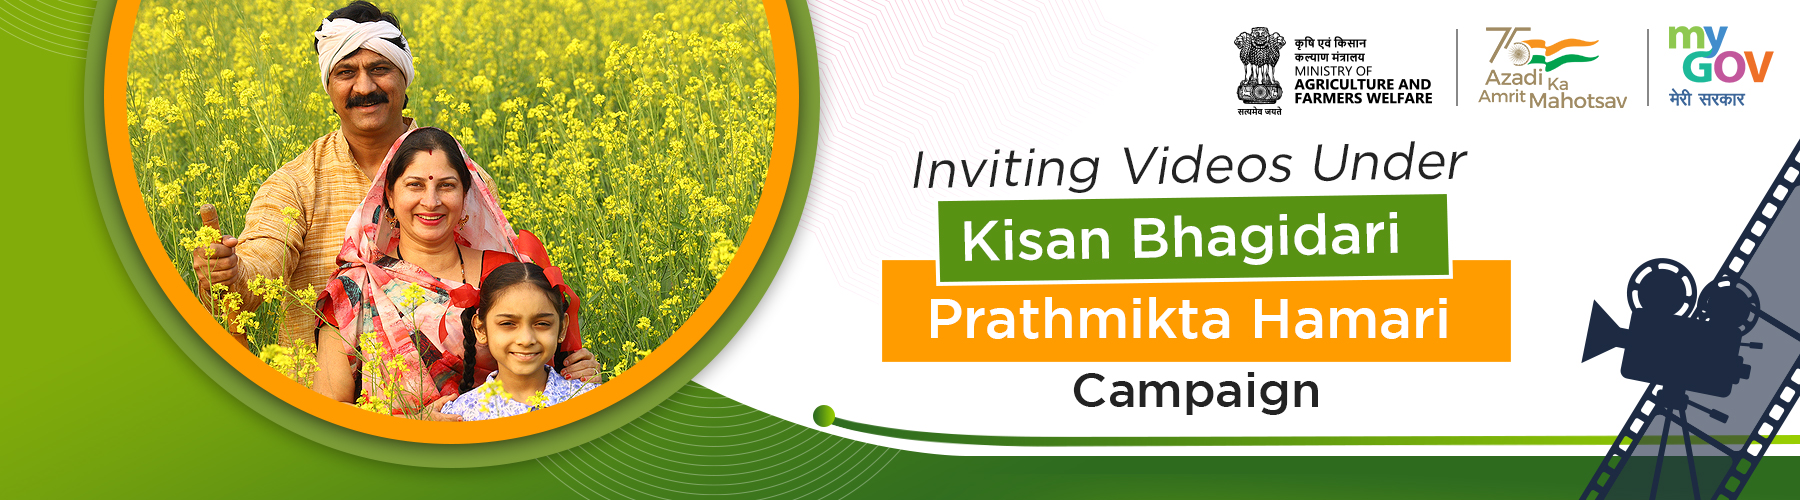 Inviting videos under Kisan Bhagidari Prathmikta Hamari Campaign